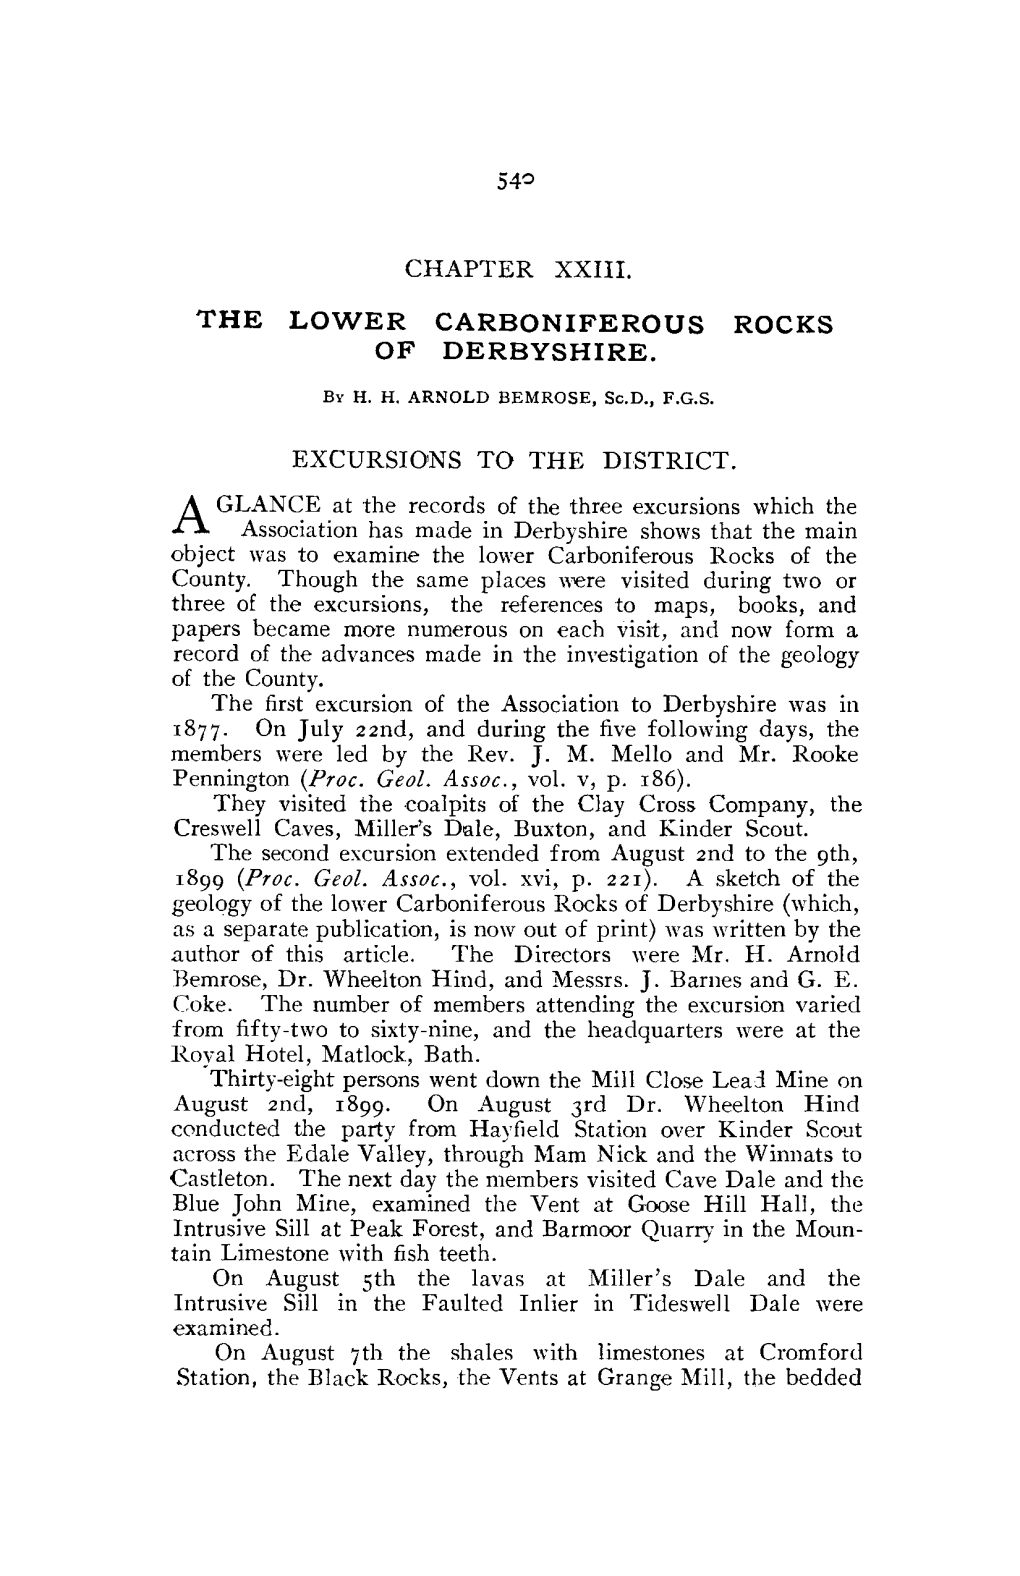 Chapter XXIII. the Lower Carboniferous Rocks of Derbyshire